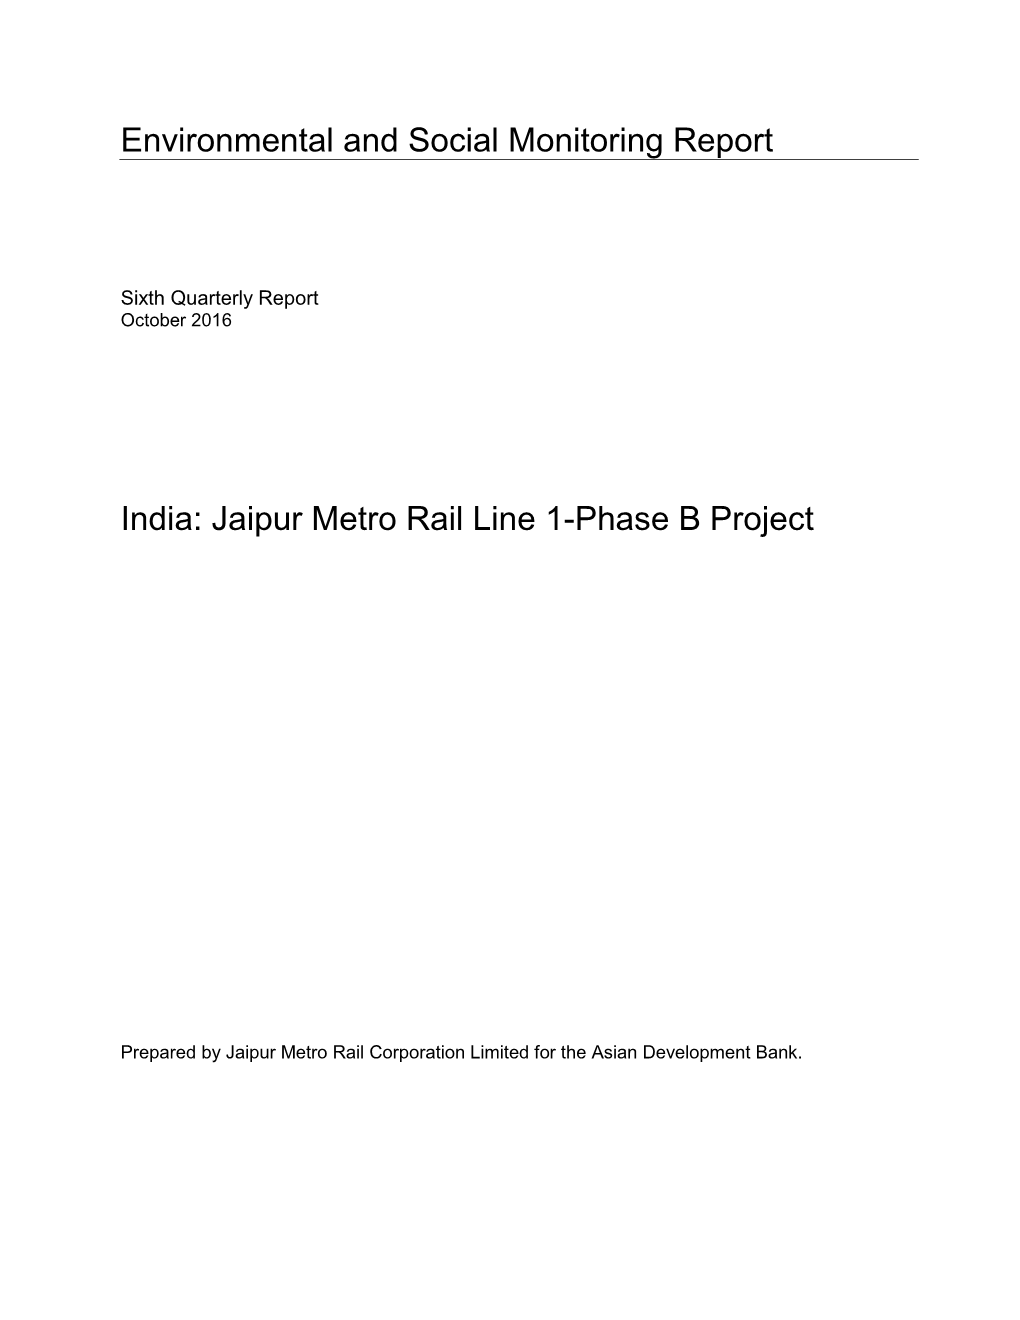 Environmental and Social Monitoring Report India: Jaipur Metro Rail Line